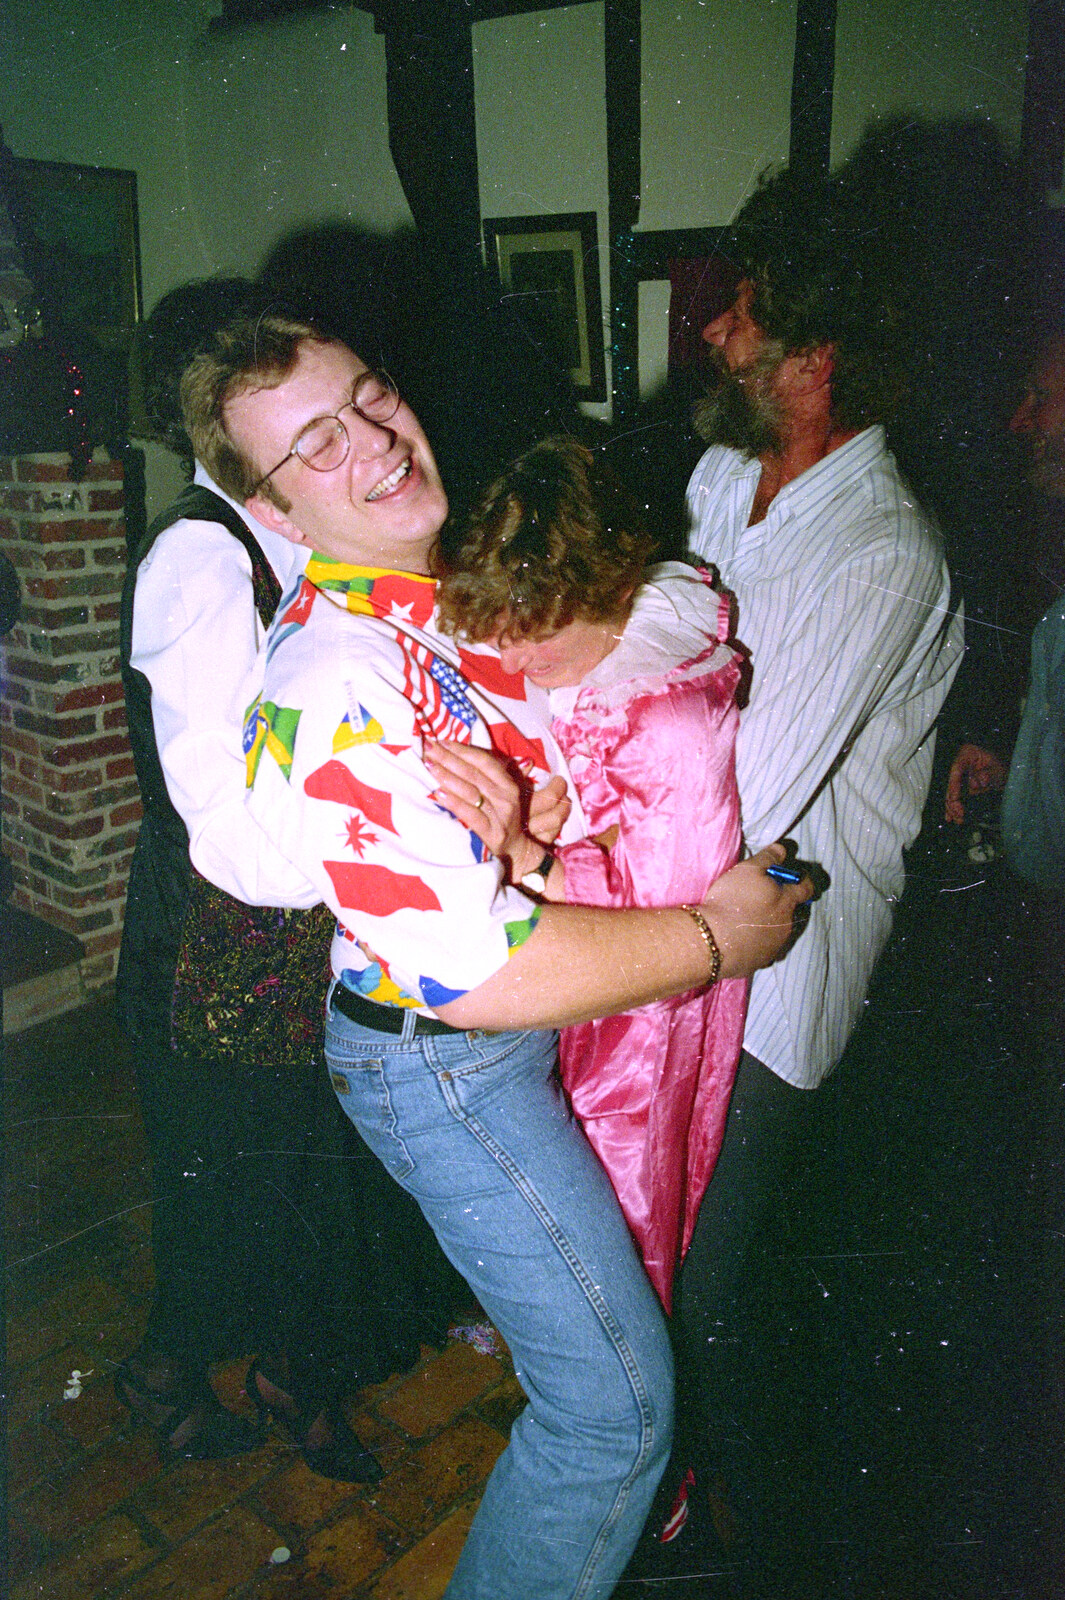 Darren and Brenda embrace from Geoff's Birthday, Stuston, Suffolk - 18th December 1995